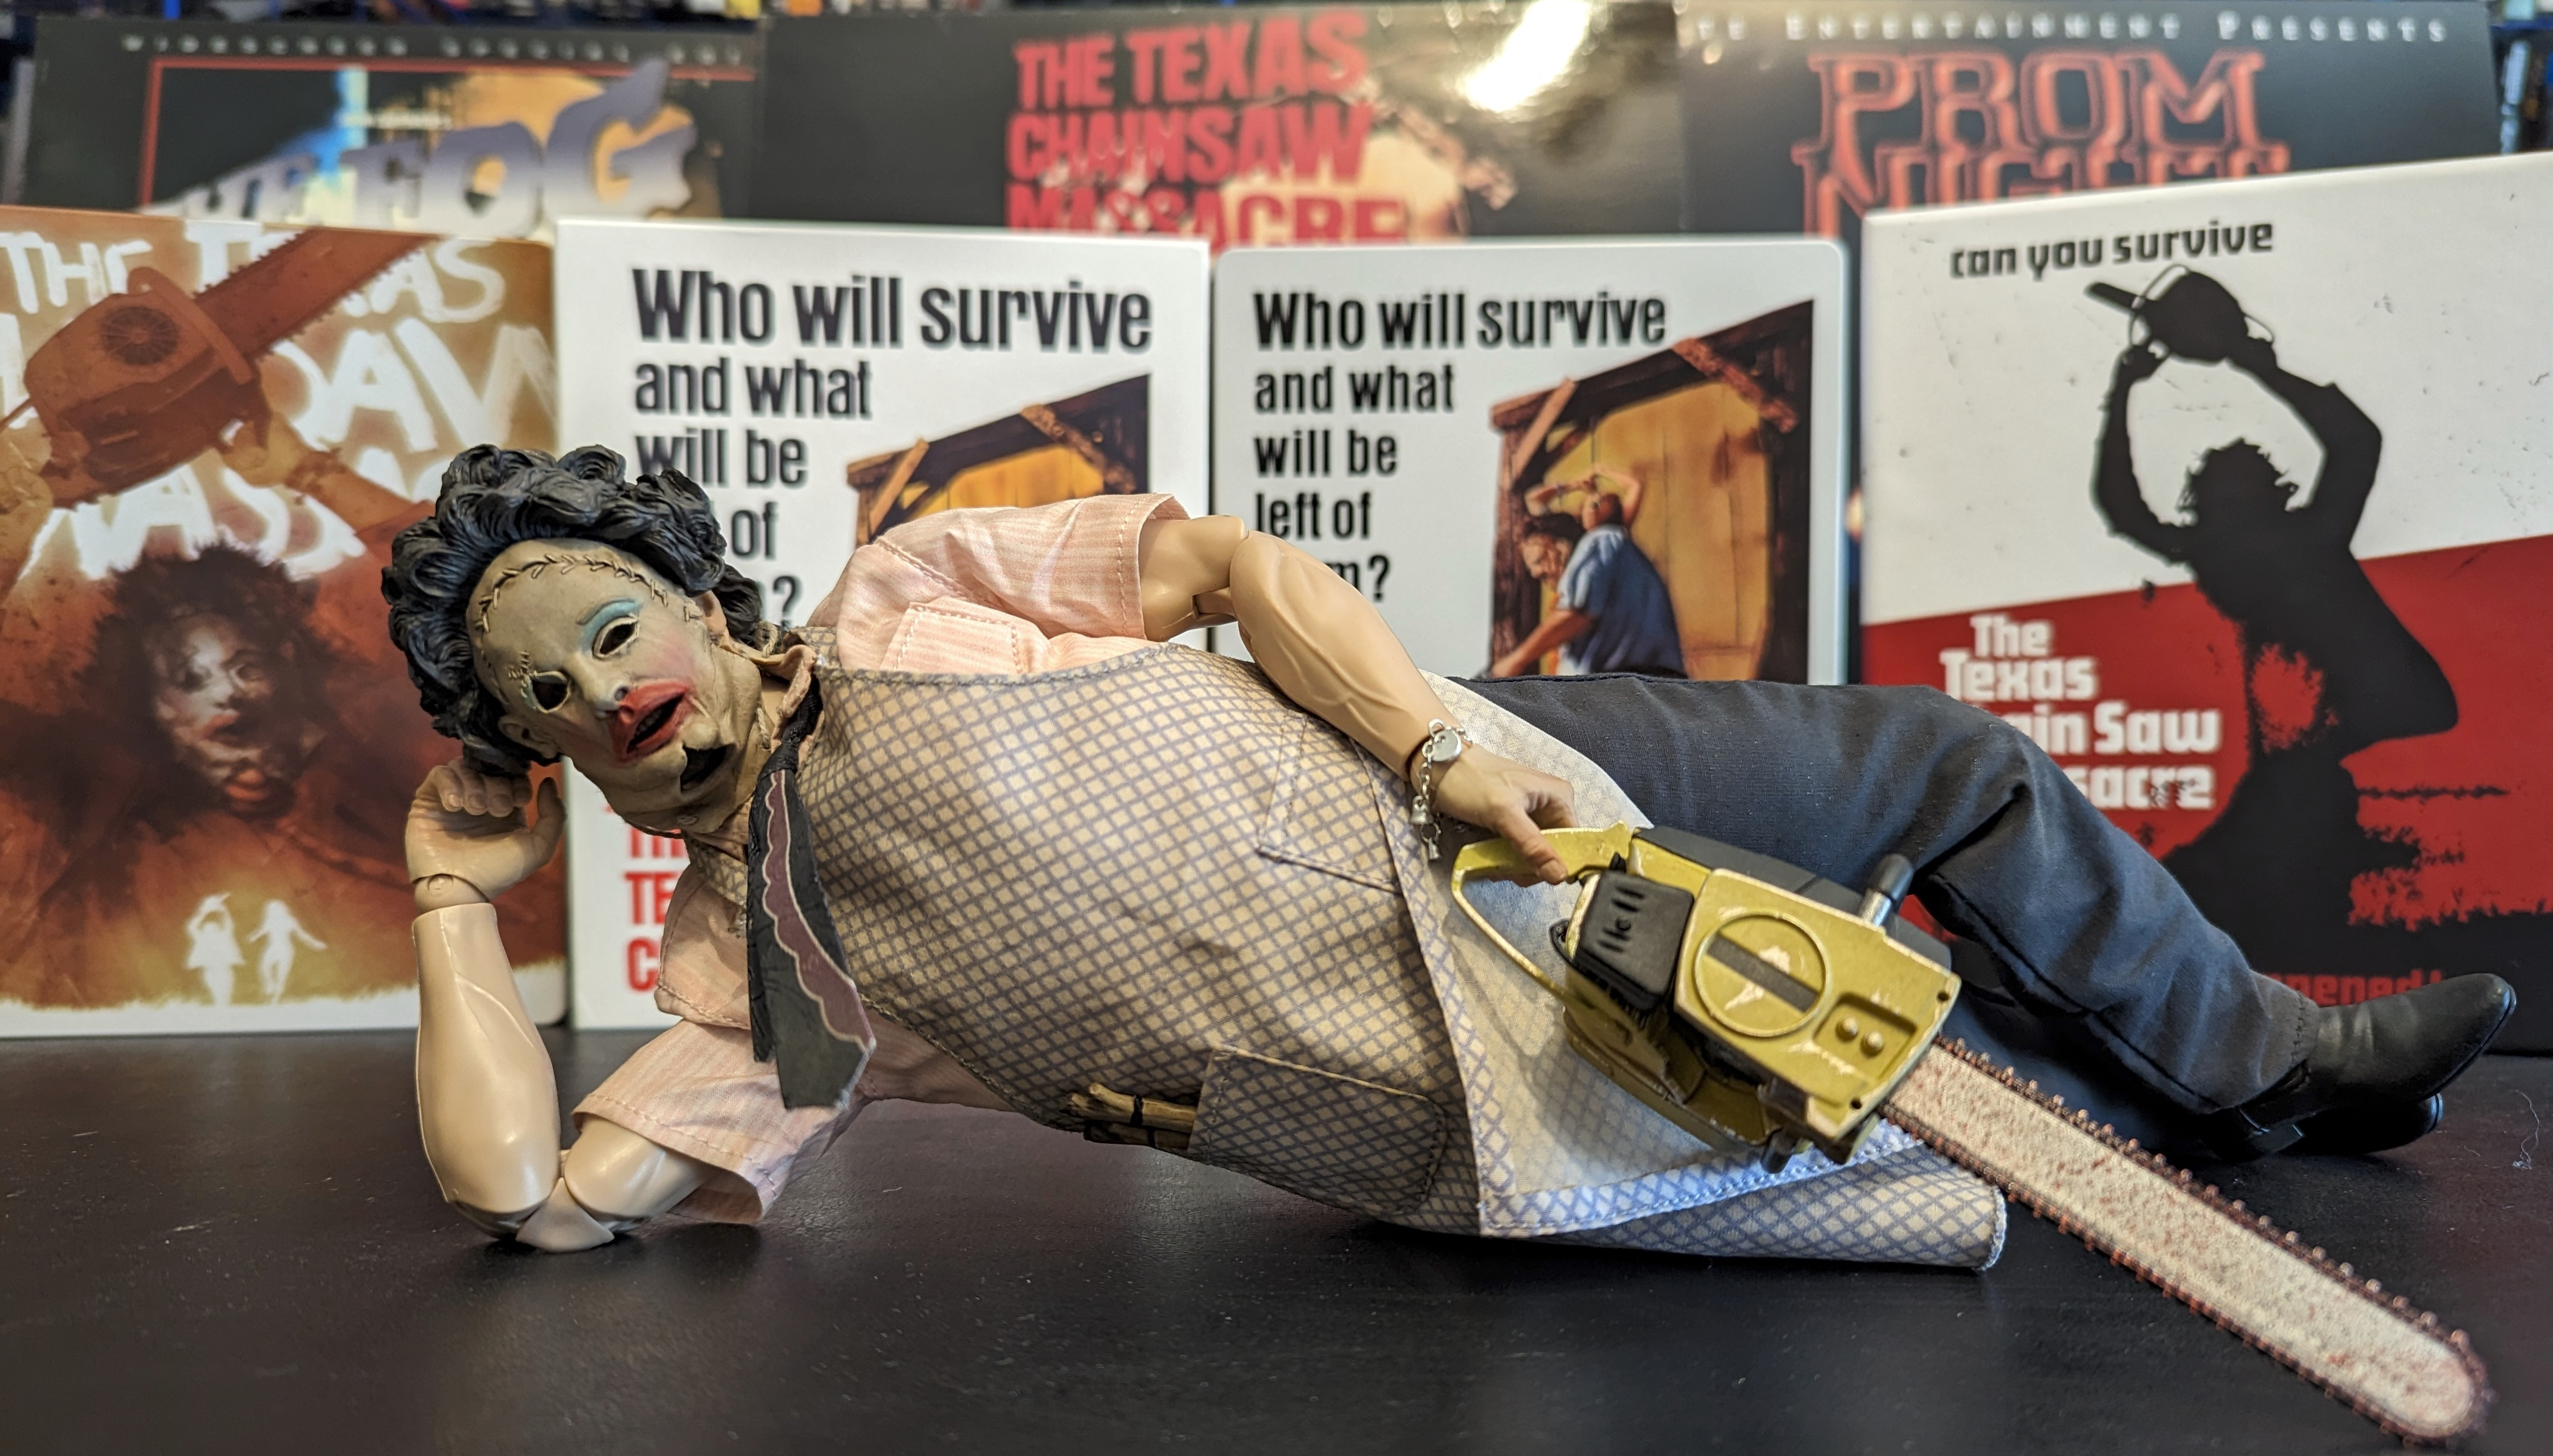 The Texas Chain Saw Massacre' 4K UHD Review: Dark Sky Films